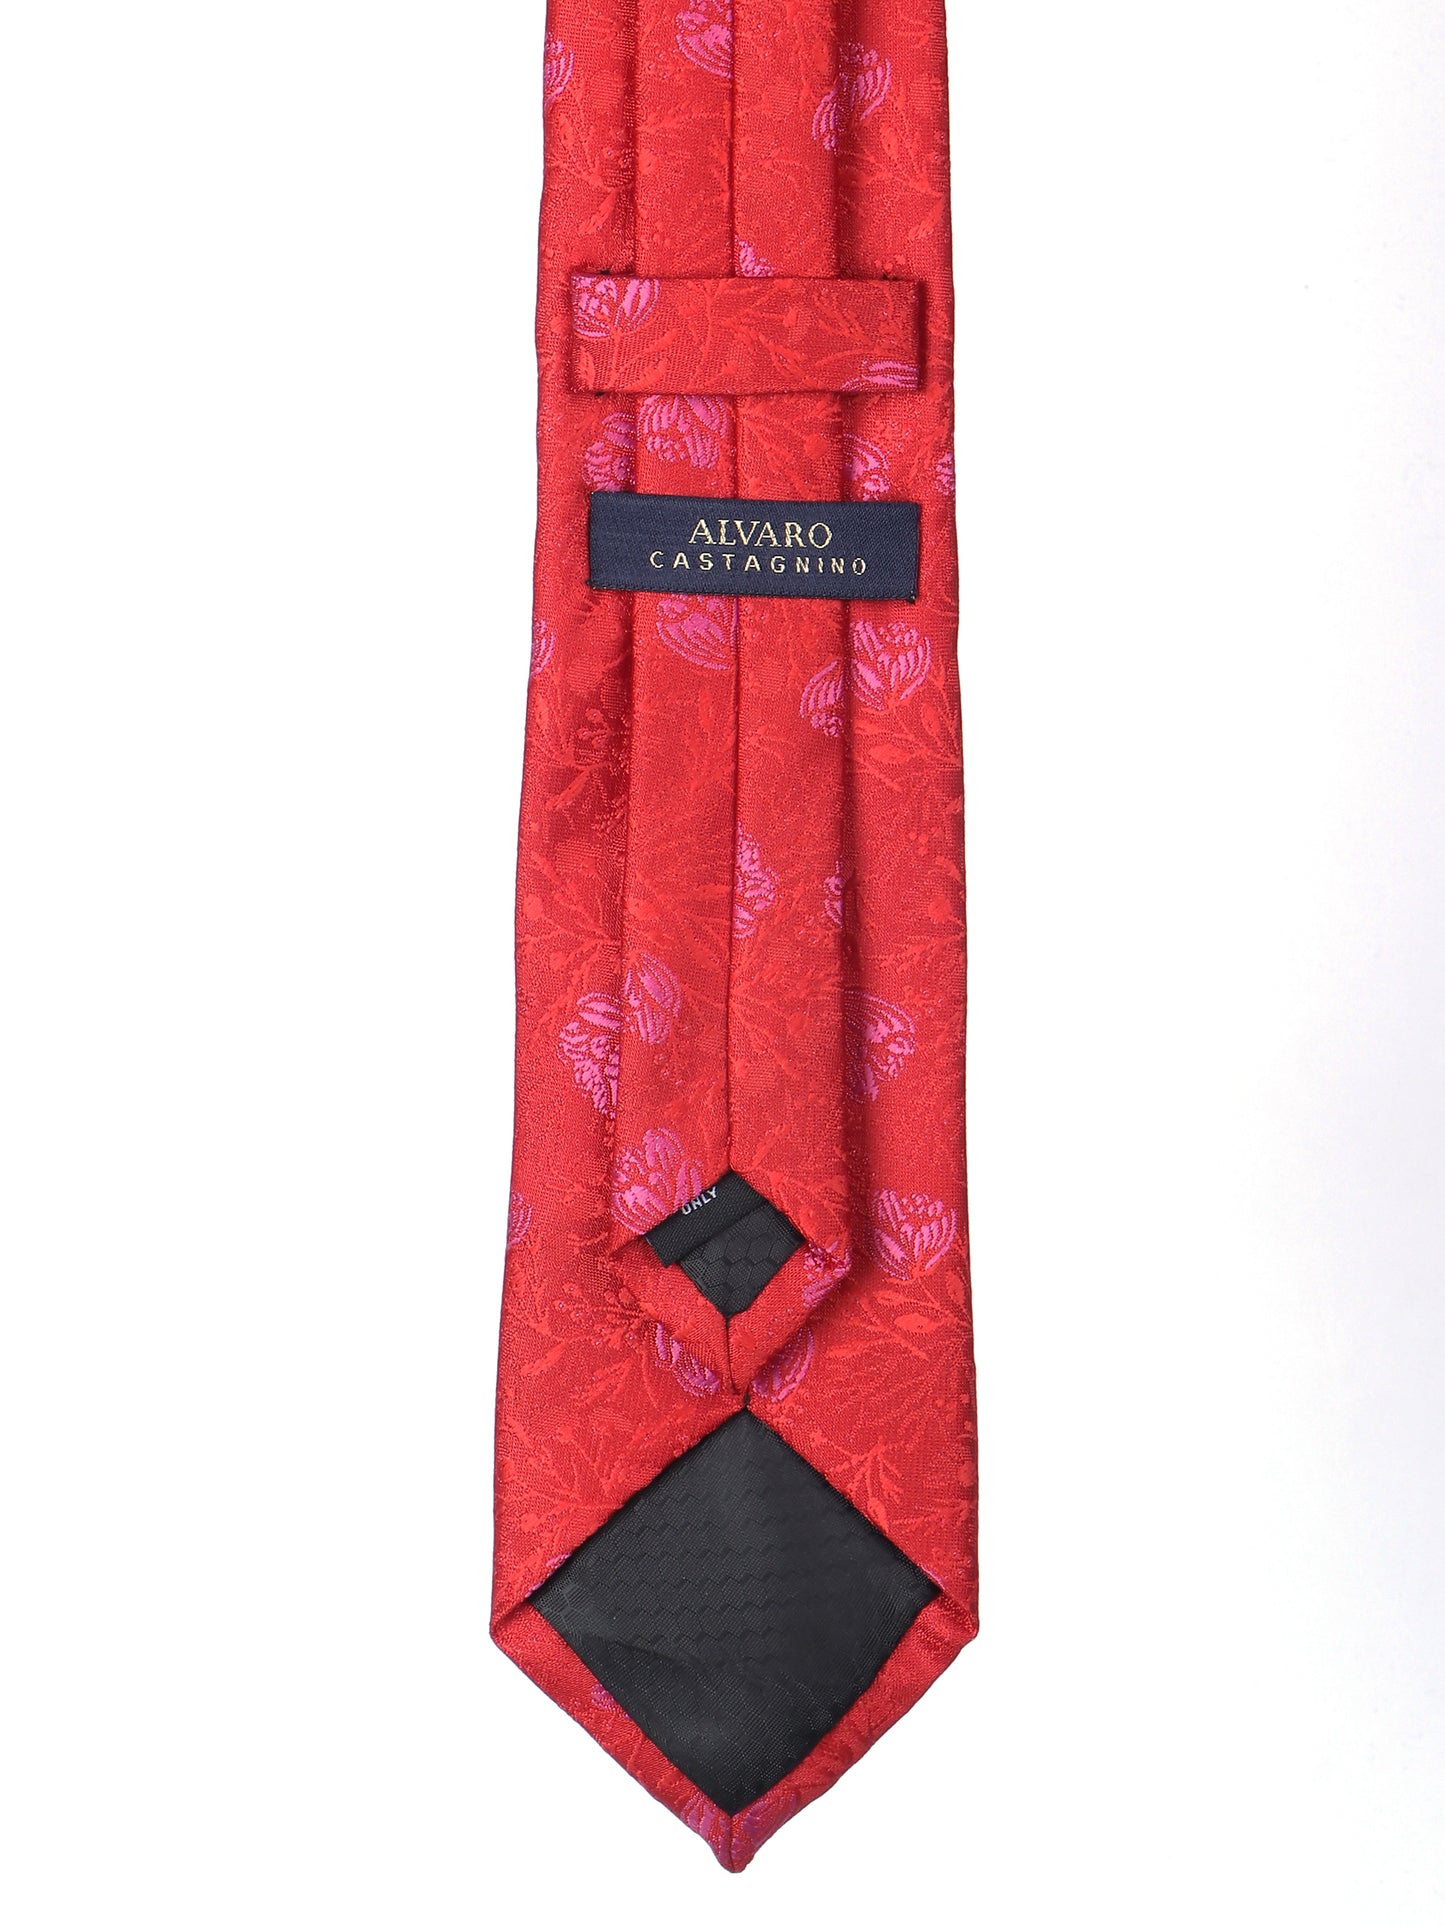 Alvaro Castagnino Microfiber Red and Pink Colored Necktie for Men